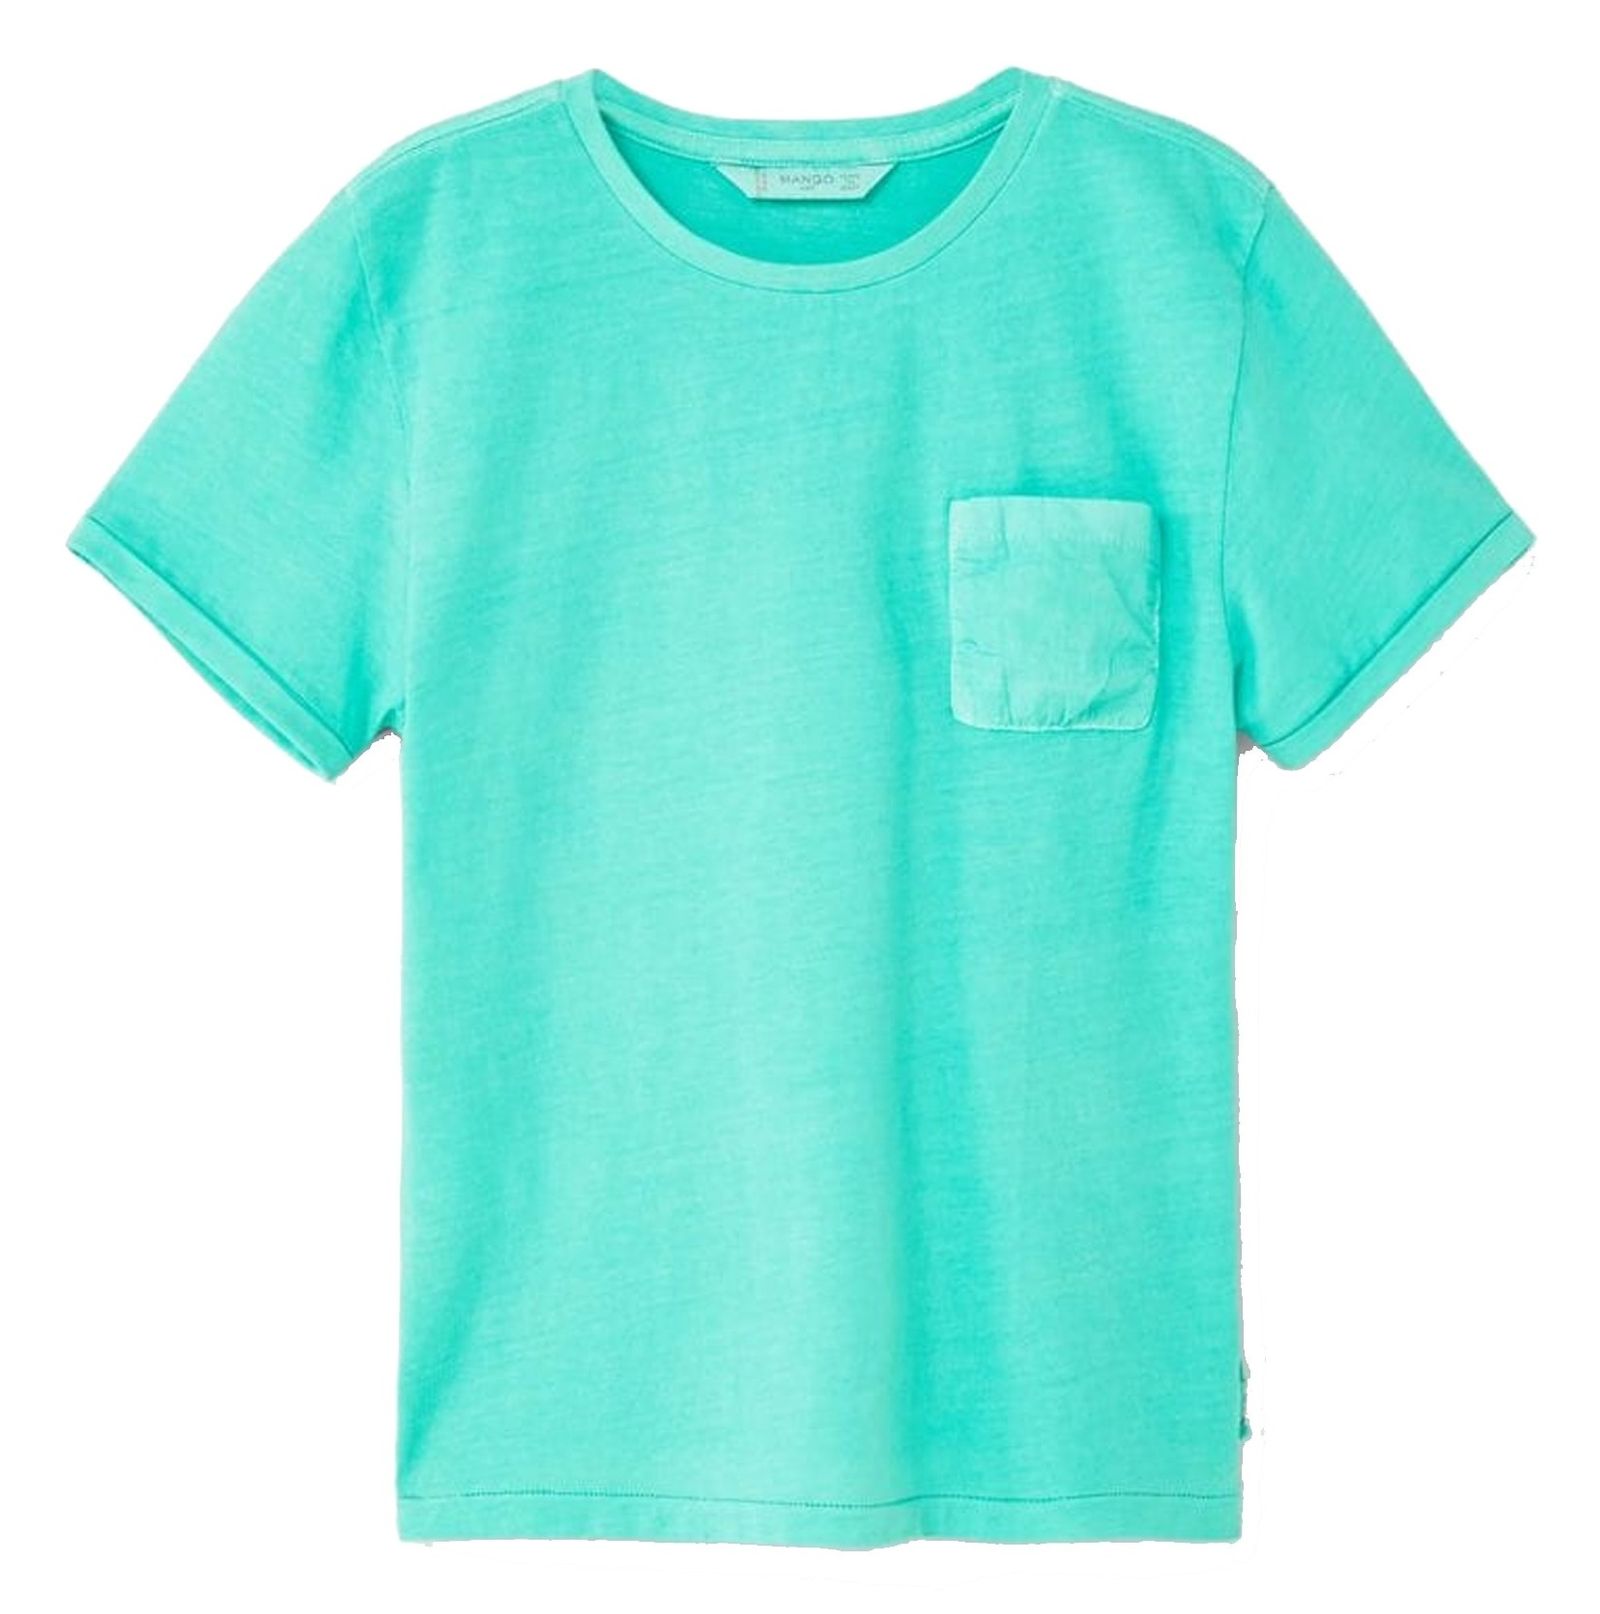 تی شرت نخی پسرانه - مانگو - سبز آبي - 2